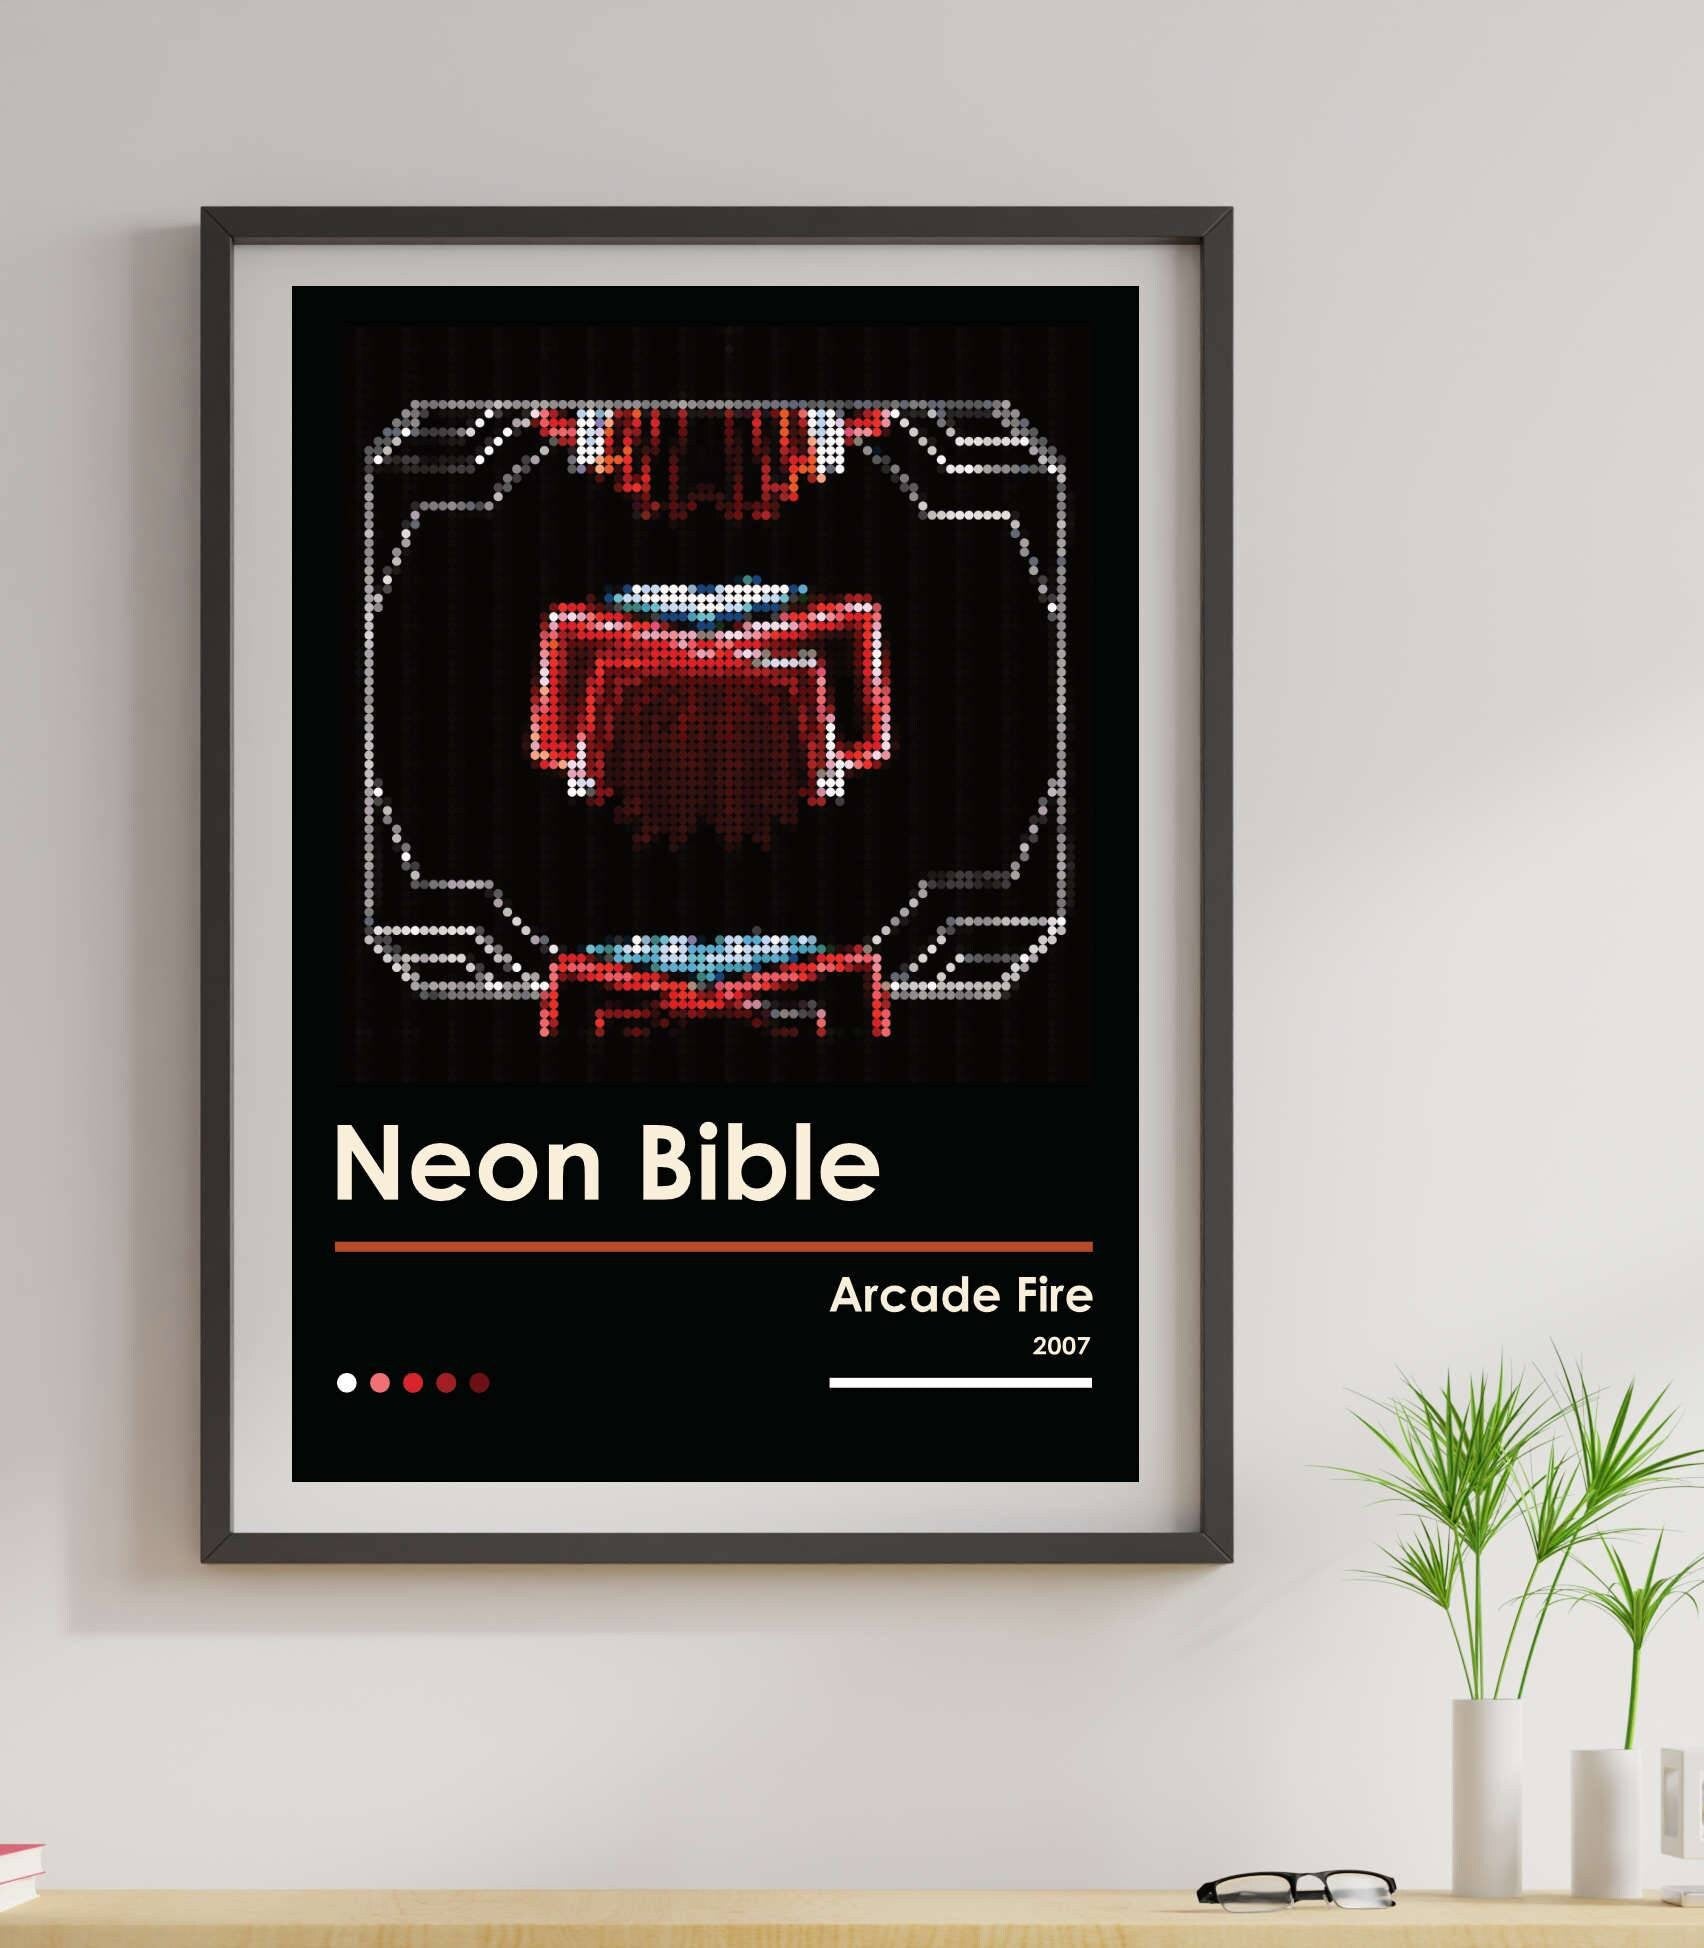 Arcade Fire Neon Bible Album Poster